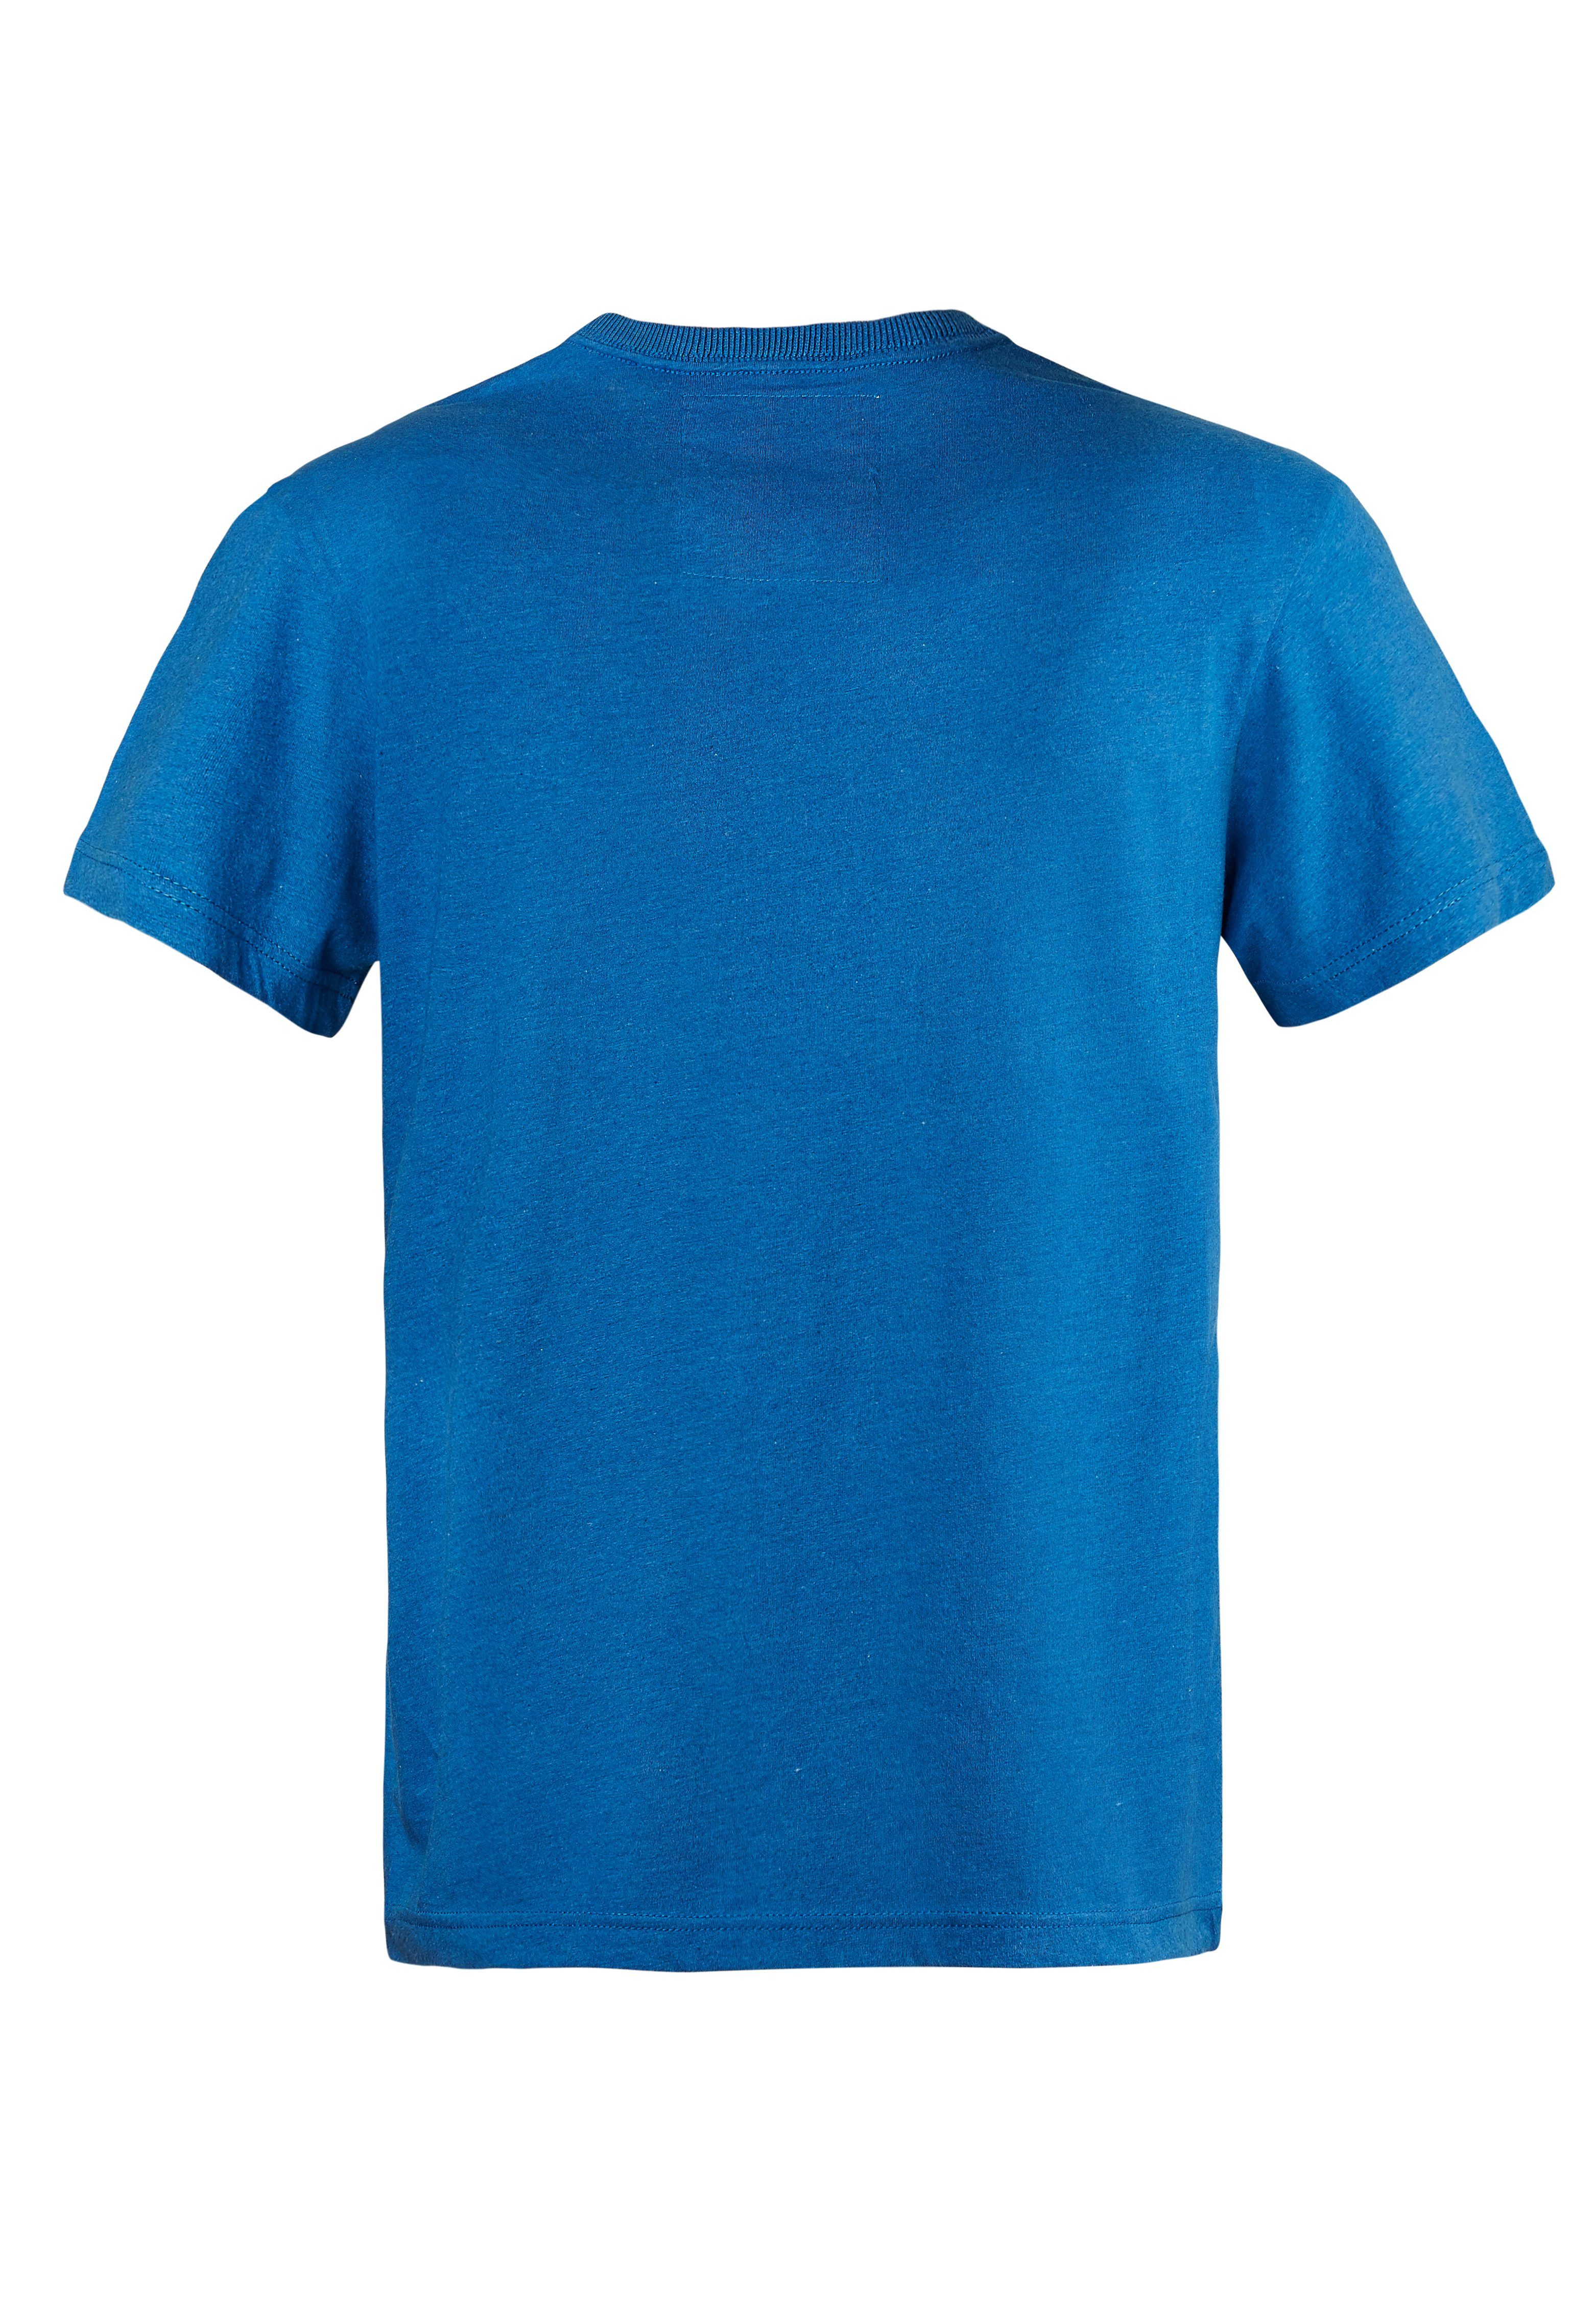 Sport royale blue T-Shirt 060 60 mel. SIOUX Cordon